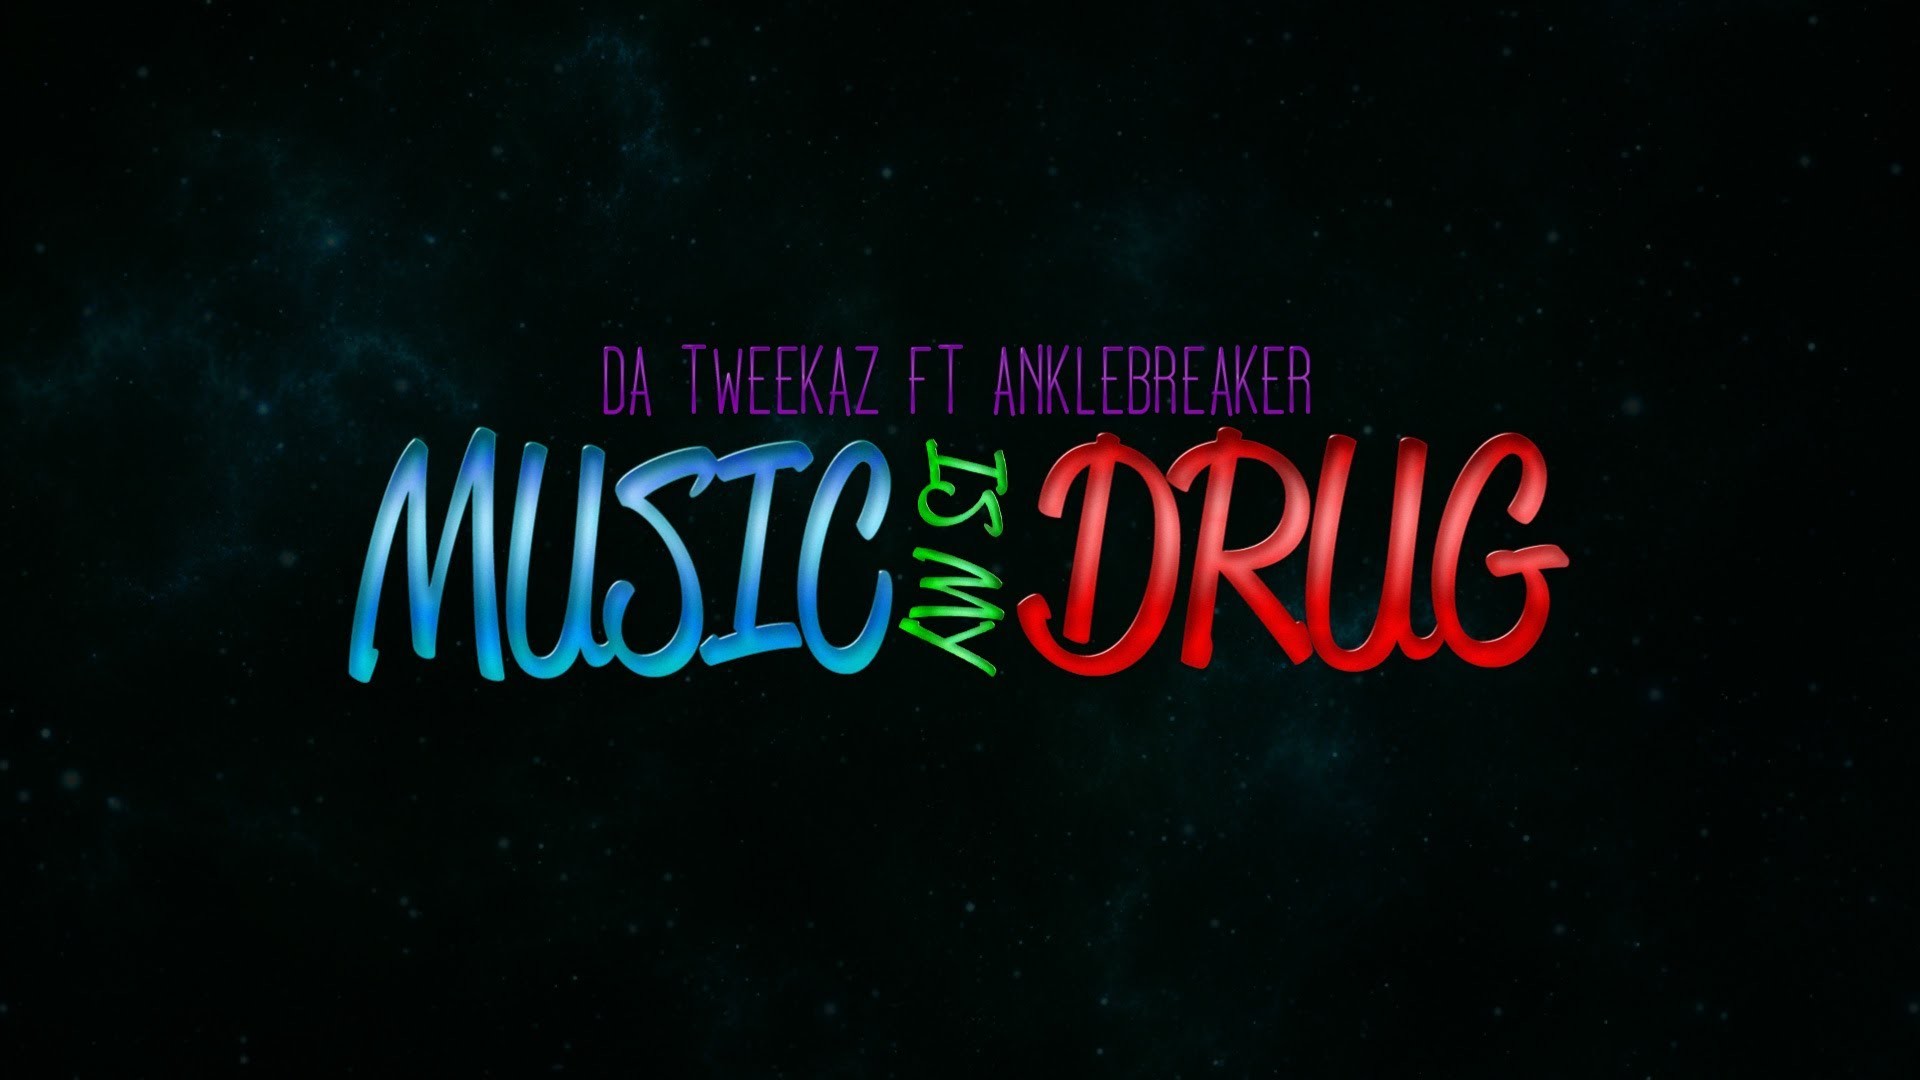 Песня друг ютуб. (2019) - Music my drug. Music is my drug.